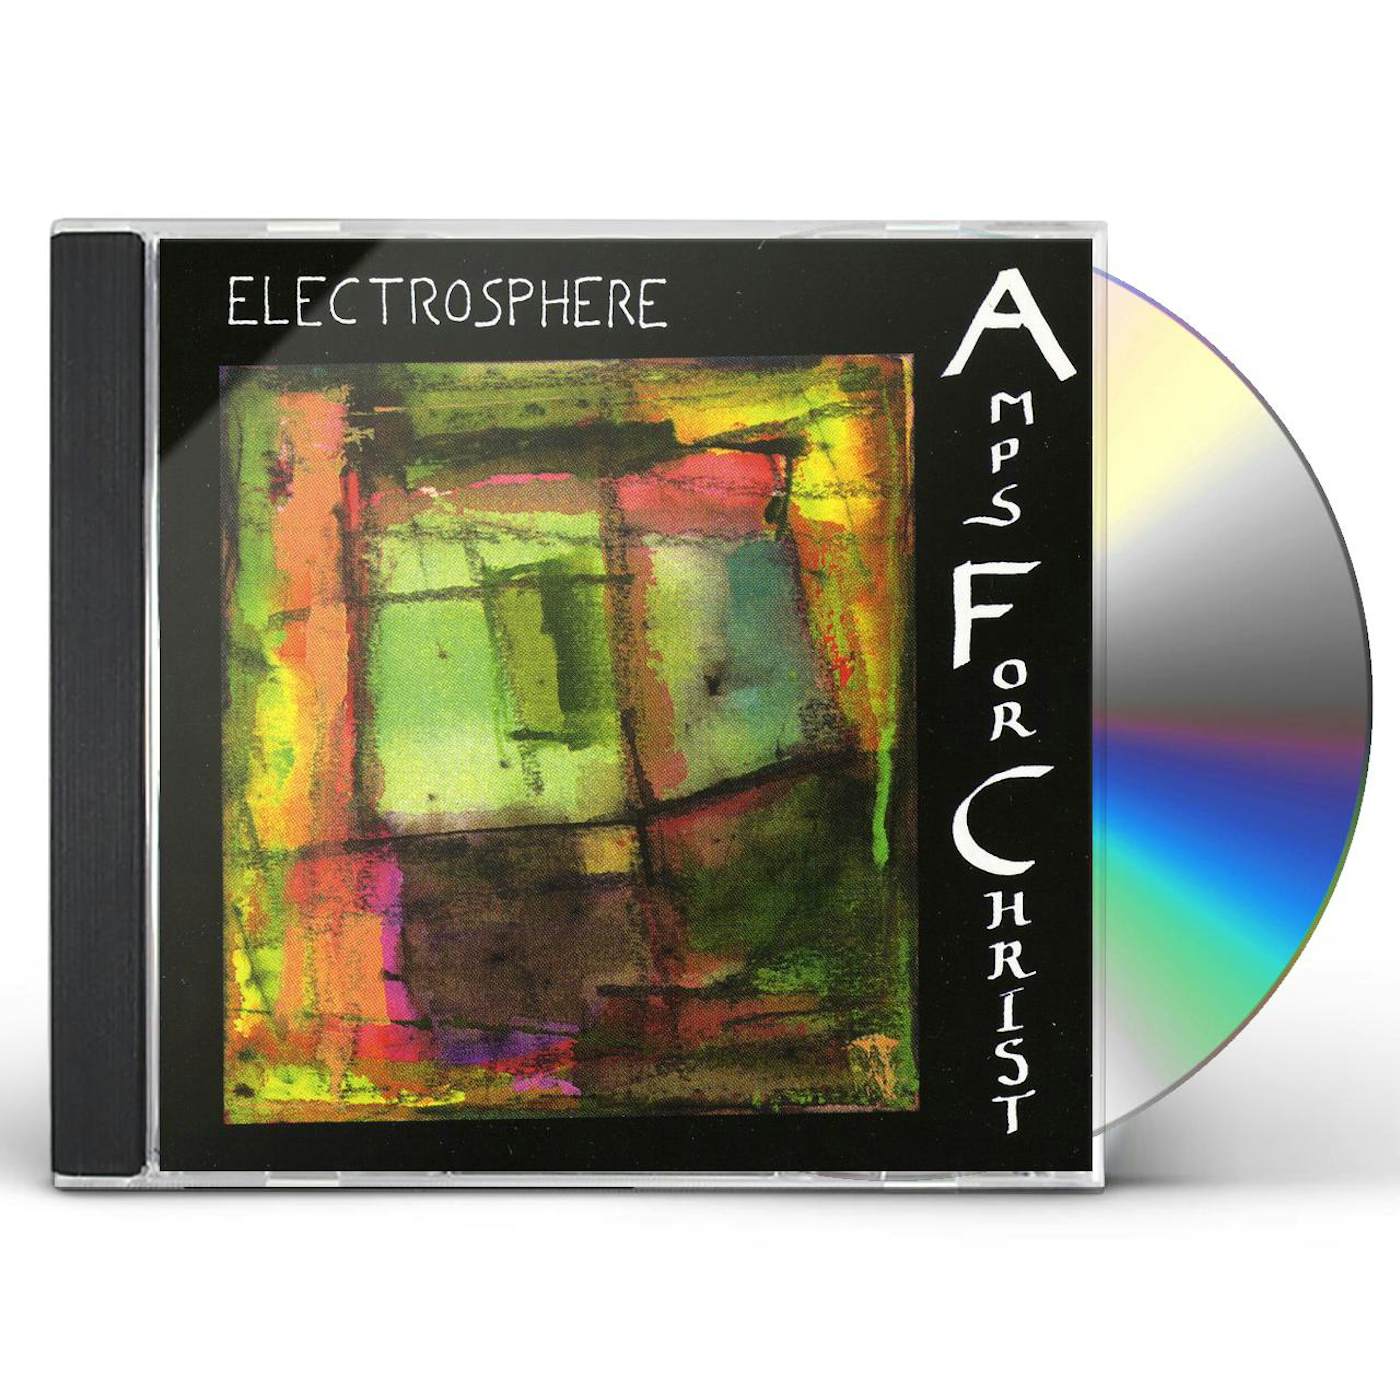 Amps For Christ ELECTROSPHERE CD